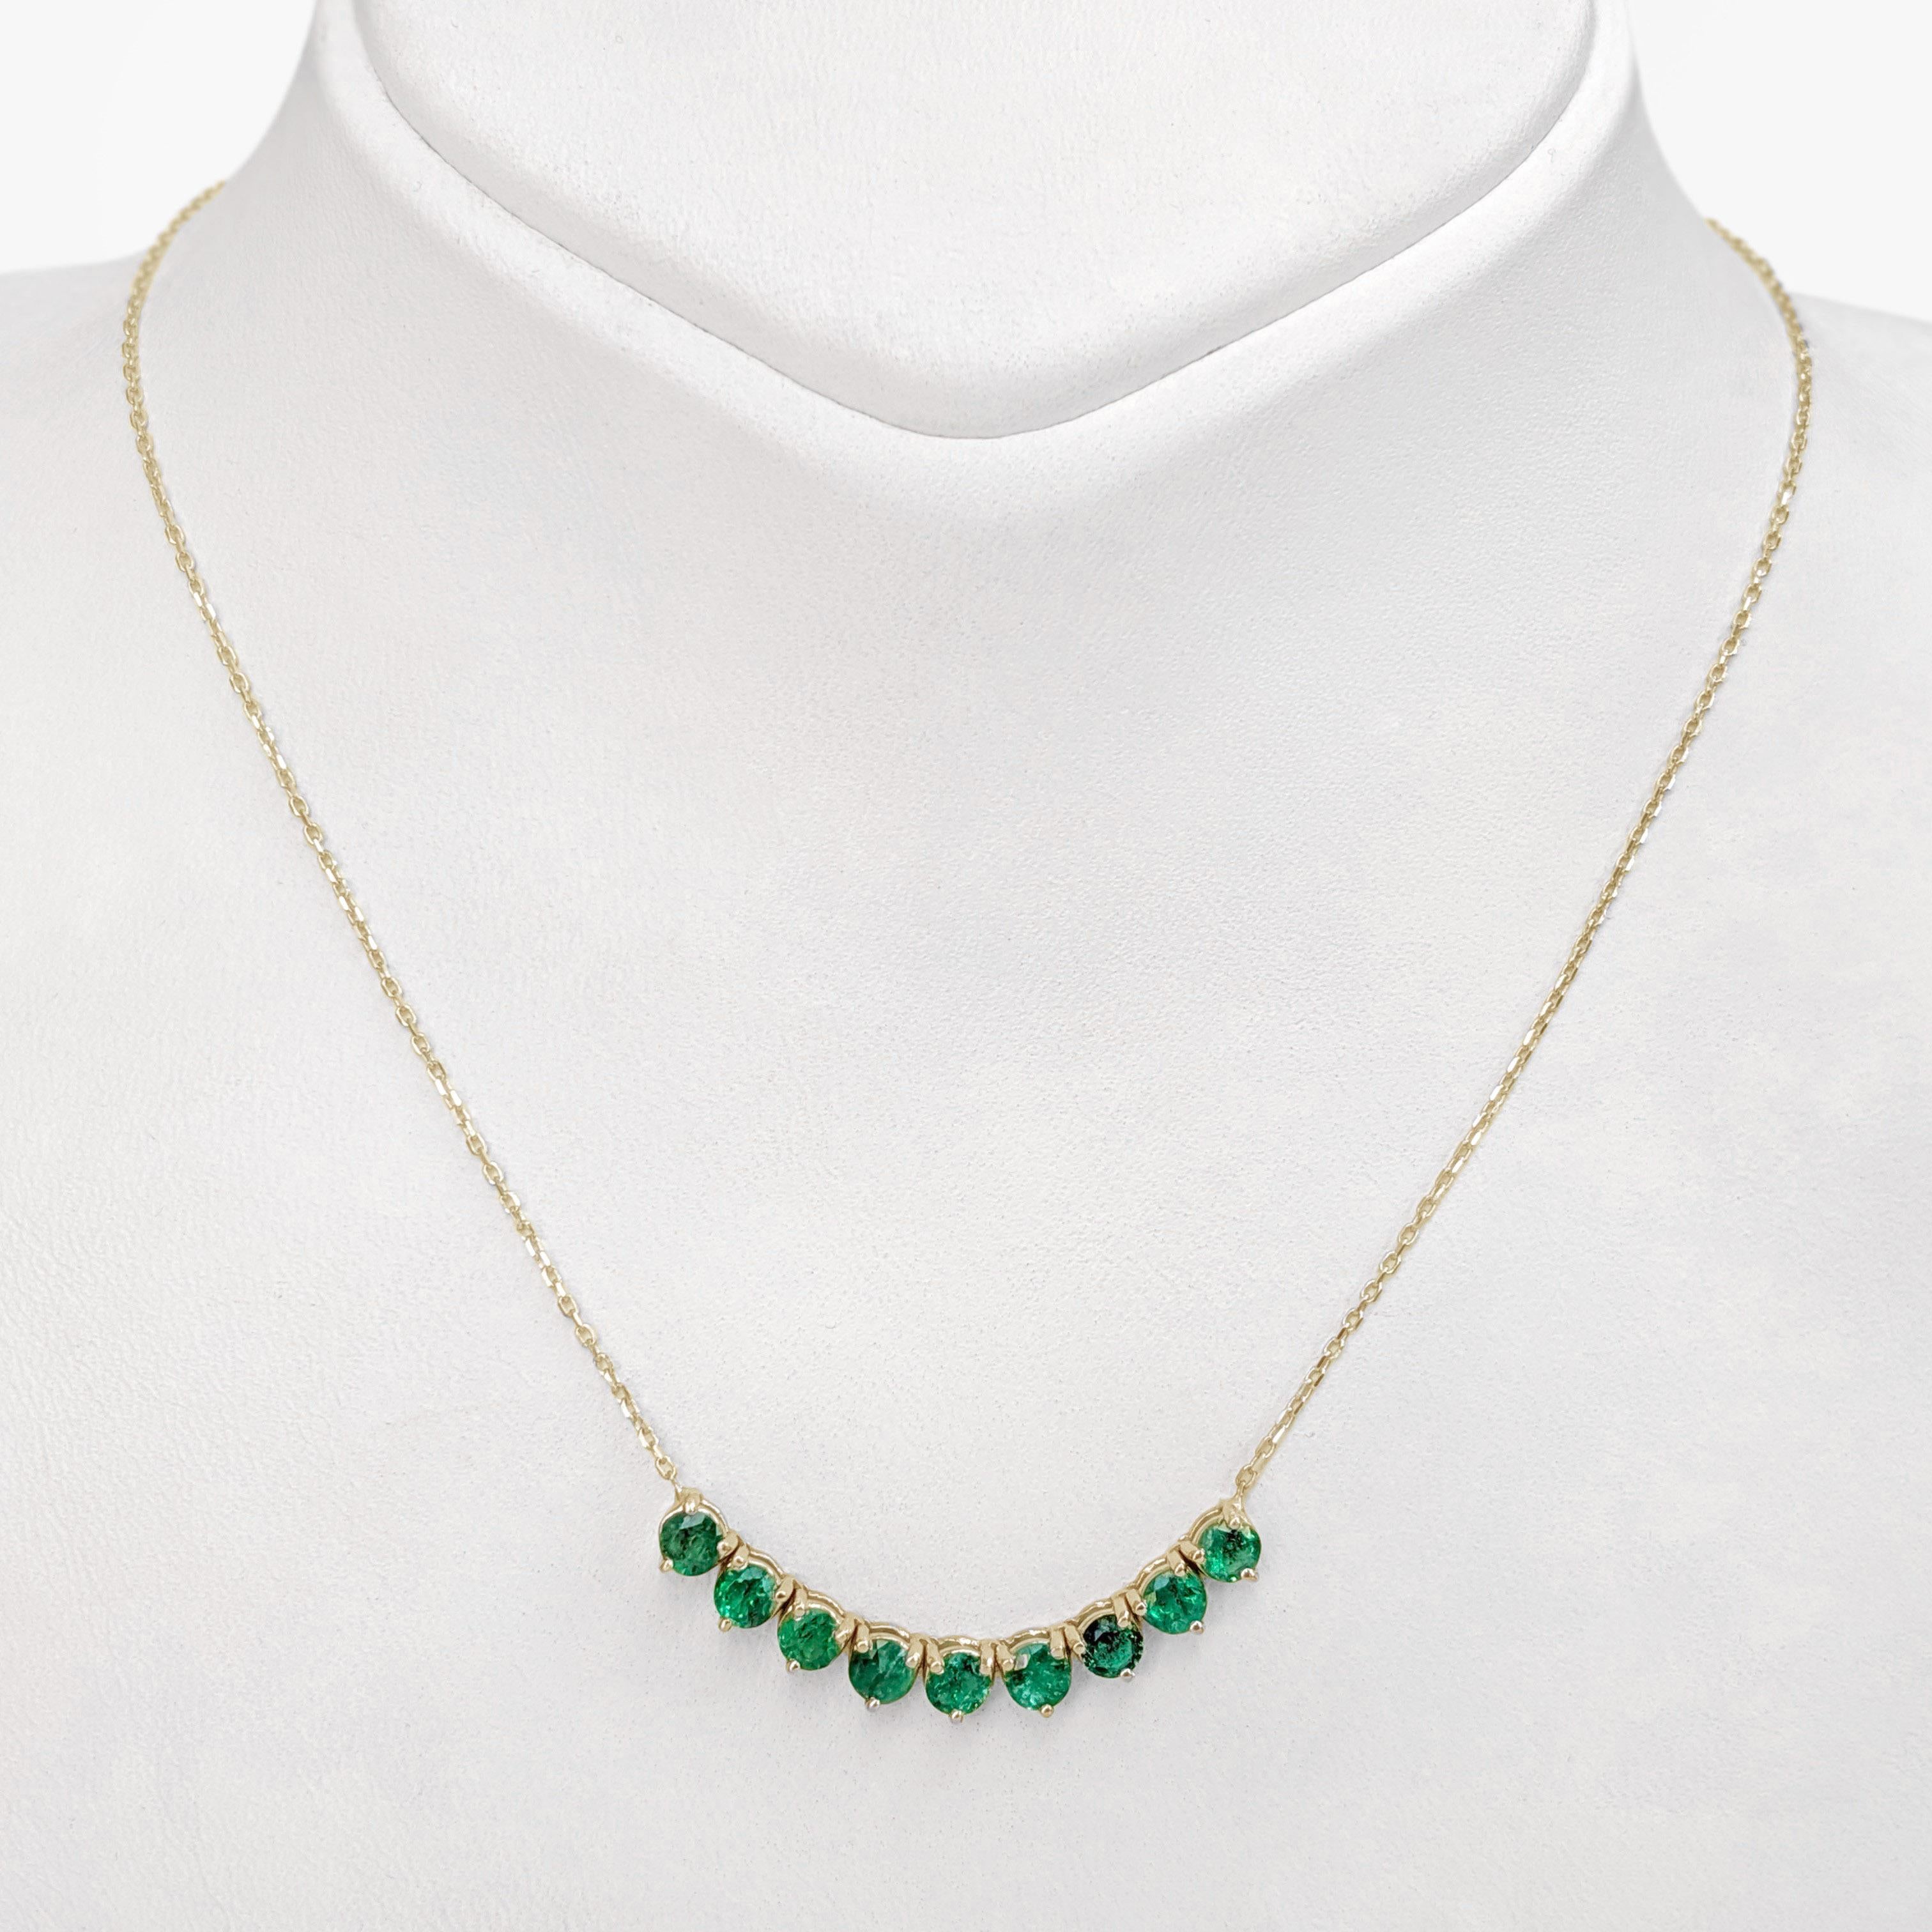 NO RESERVE! 1.47 Carat Natural Emerald Riviera - 14 kt. Gold - Necklace 1